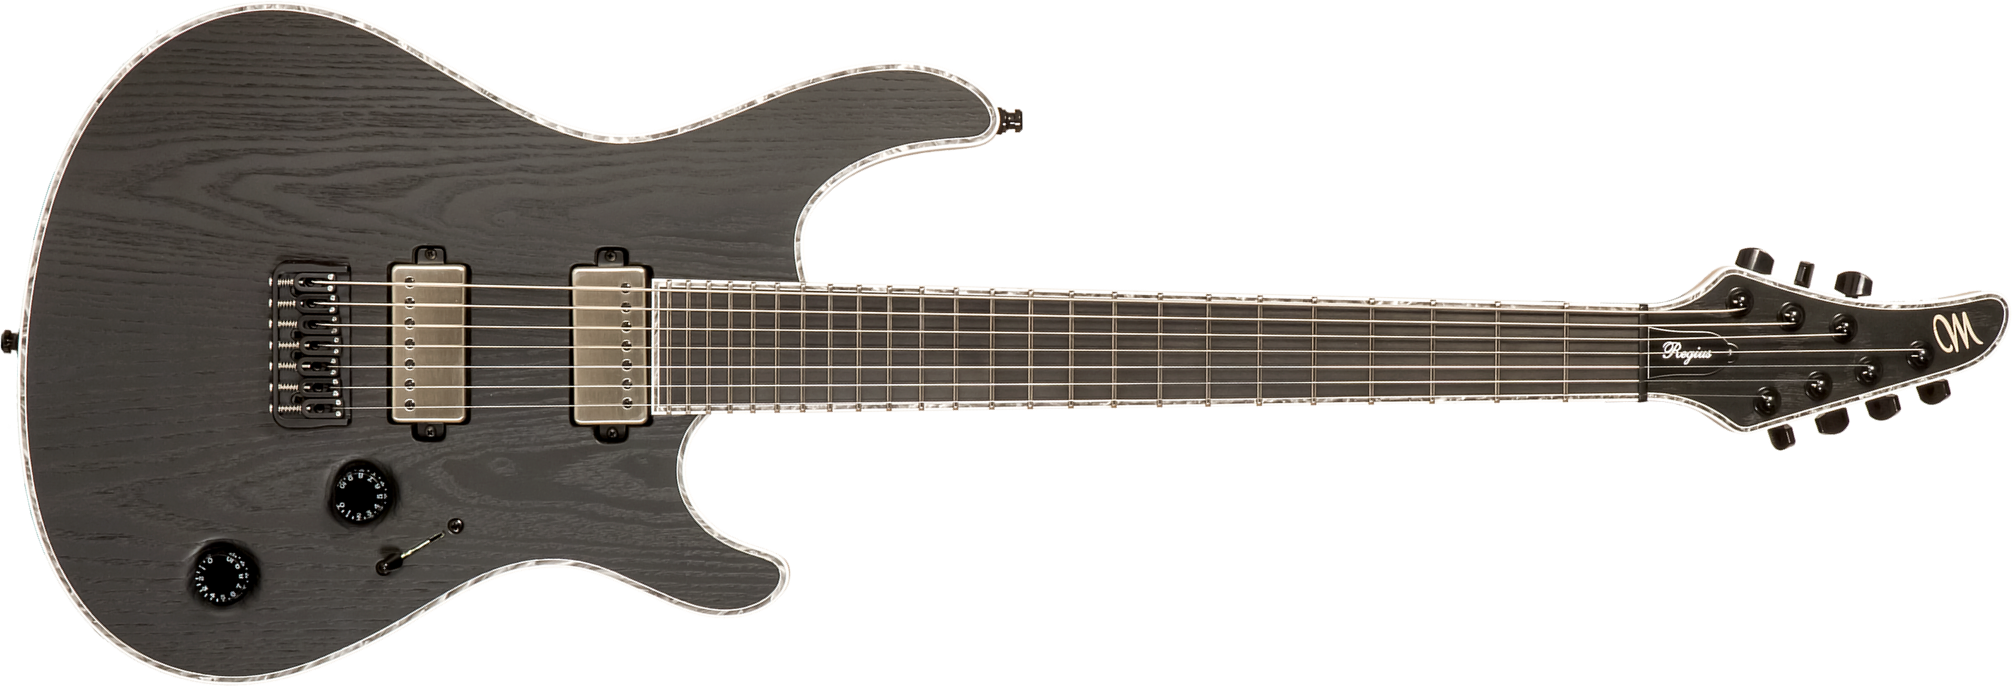 Mayones Guitars Regius Gothic Ash 7c 2h Bkp Ht Eb #rf2312801 - Gothic Black Ash - 7-saitige E-Gitarre - Main picture